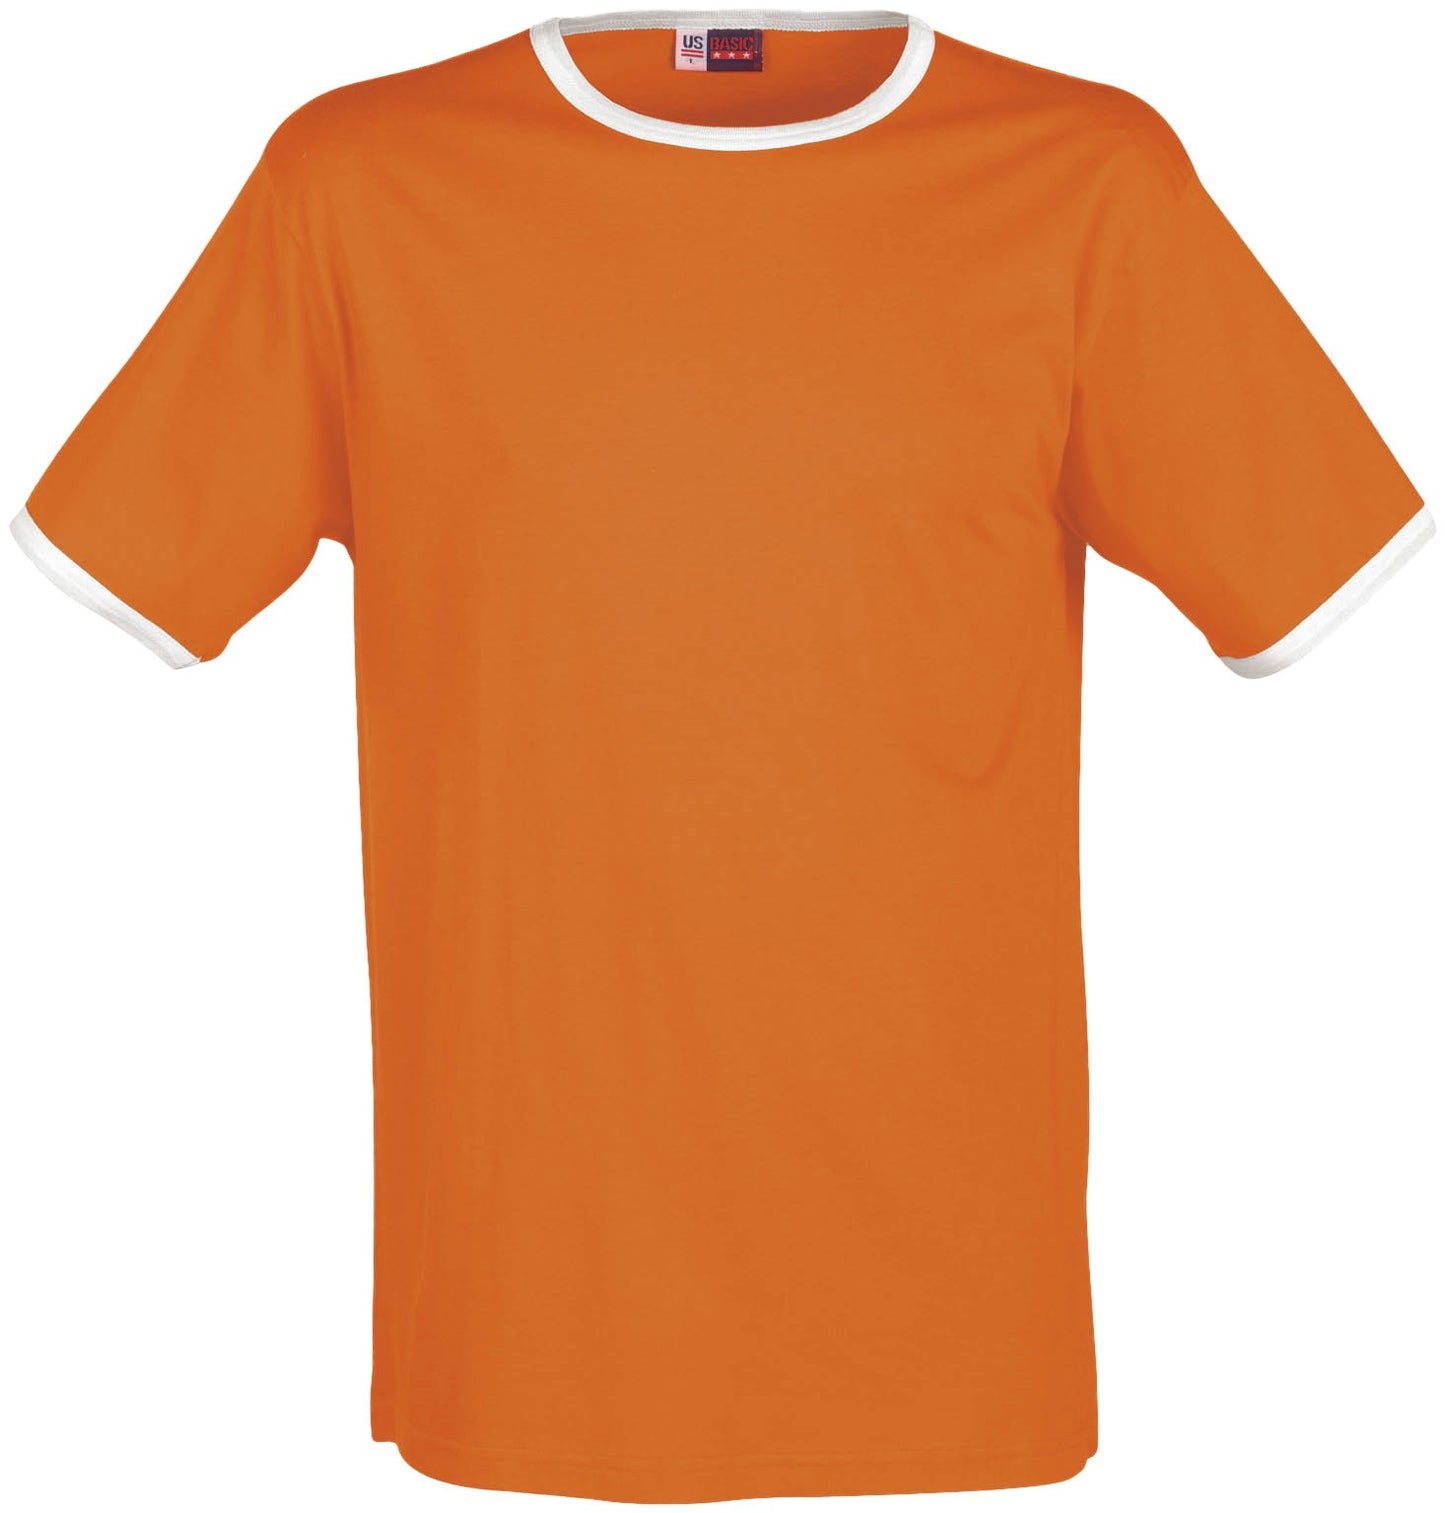 Mens Adelaide Contrast T-Shirt - Orange Only